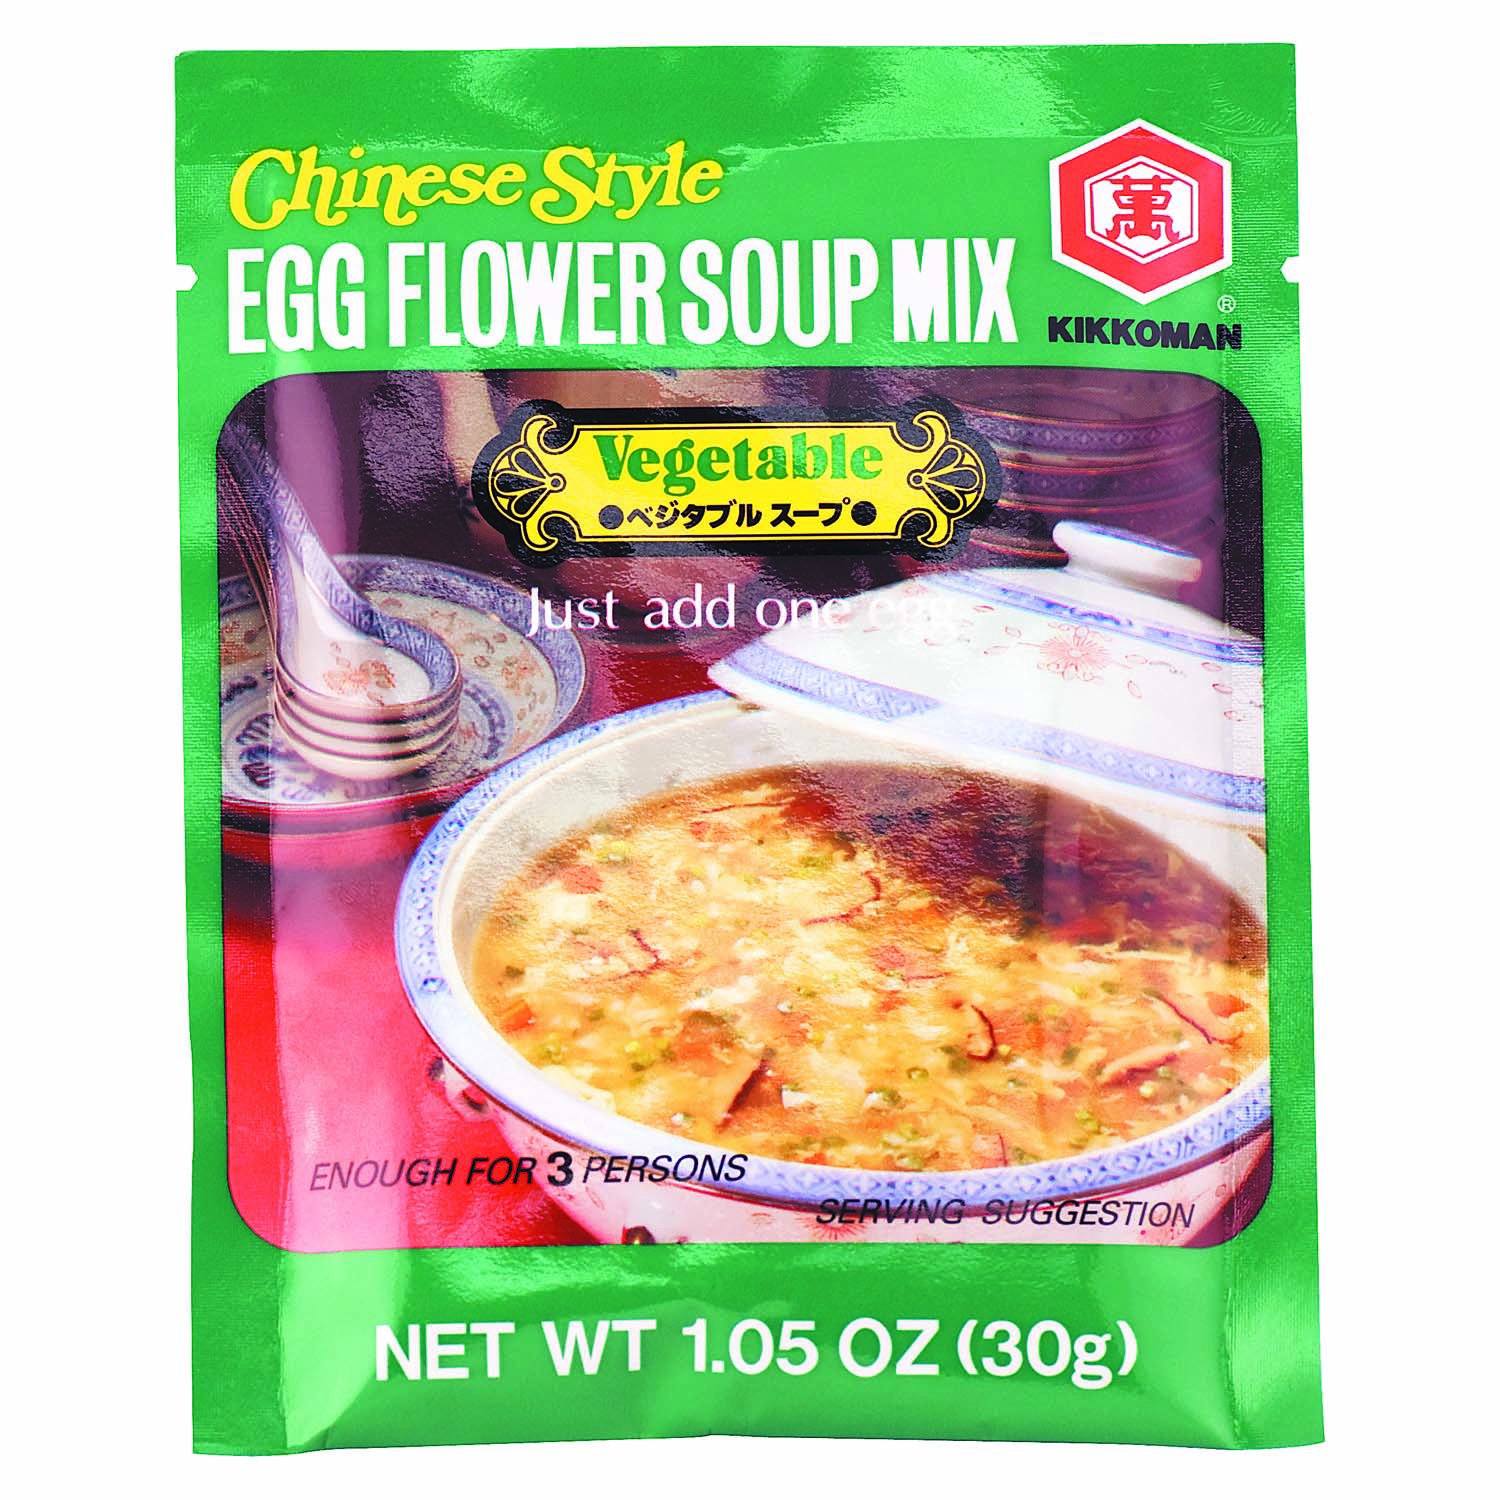 Kikkoman Egg Flower Vegetable Soup Mix